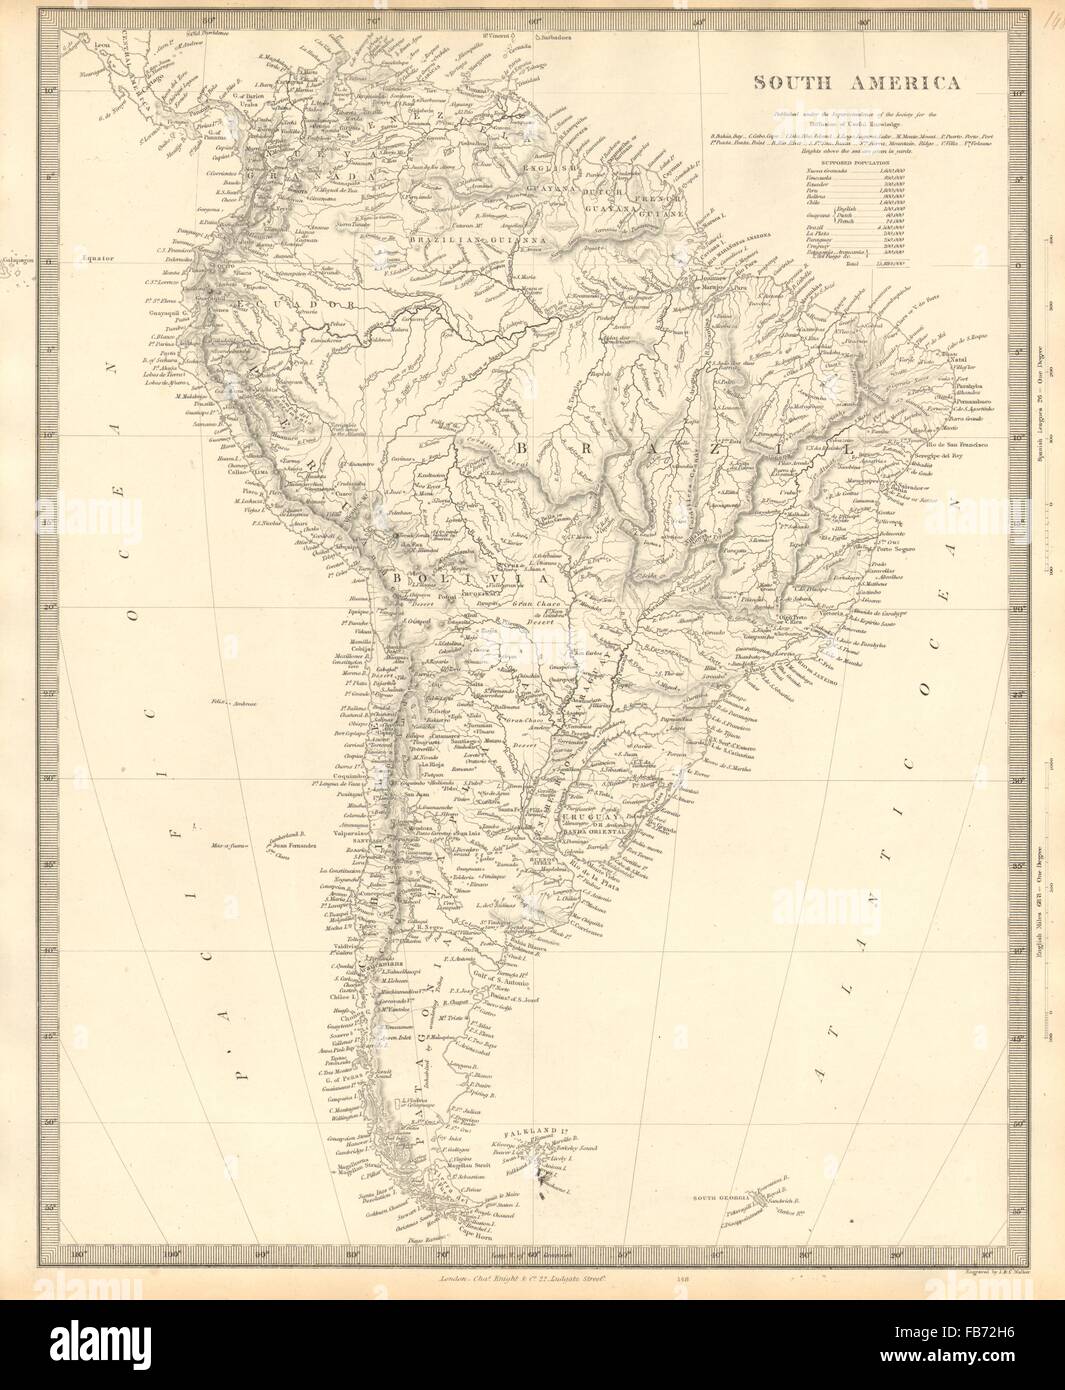 SOUTH AMERICA: Brazil Chle Peru Bolivia Patagonia La Plata. SDUK, 1848 old map Stock Photo